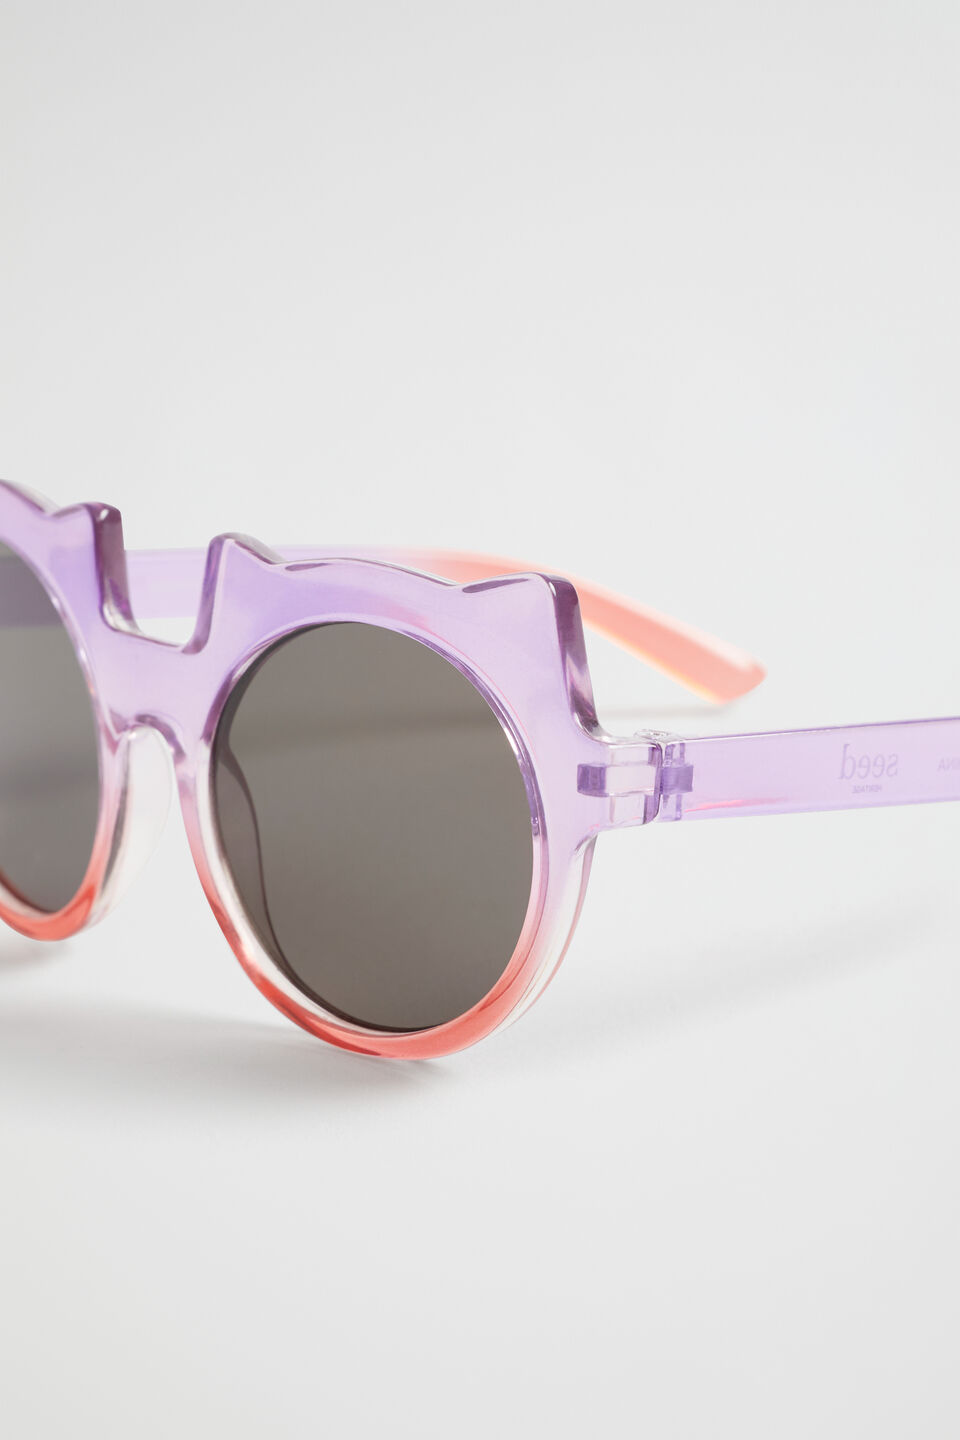 Ombre Cat Ear Sunglasses  Multi